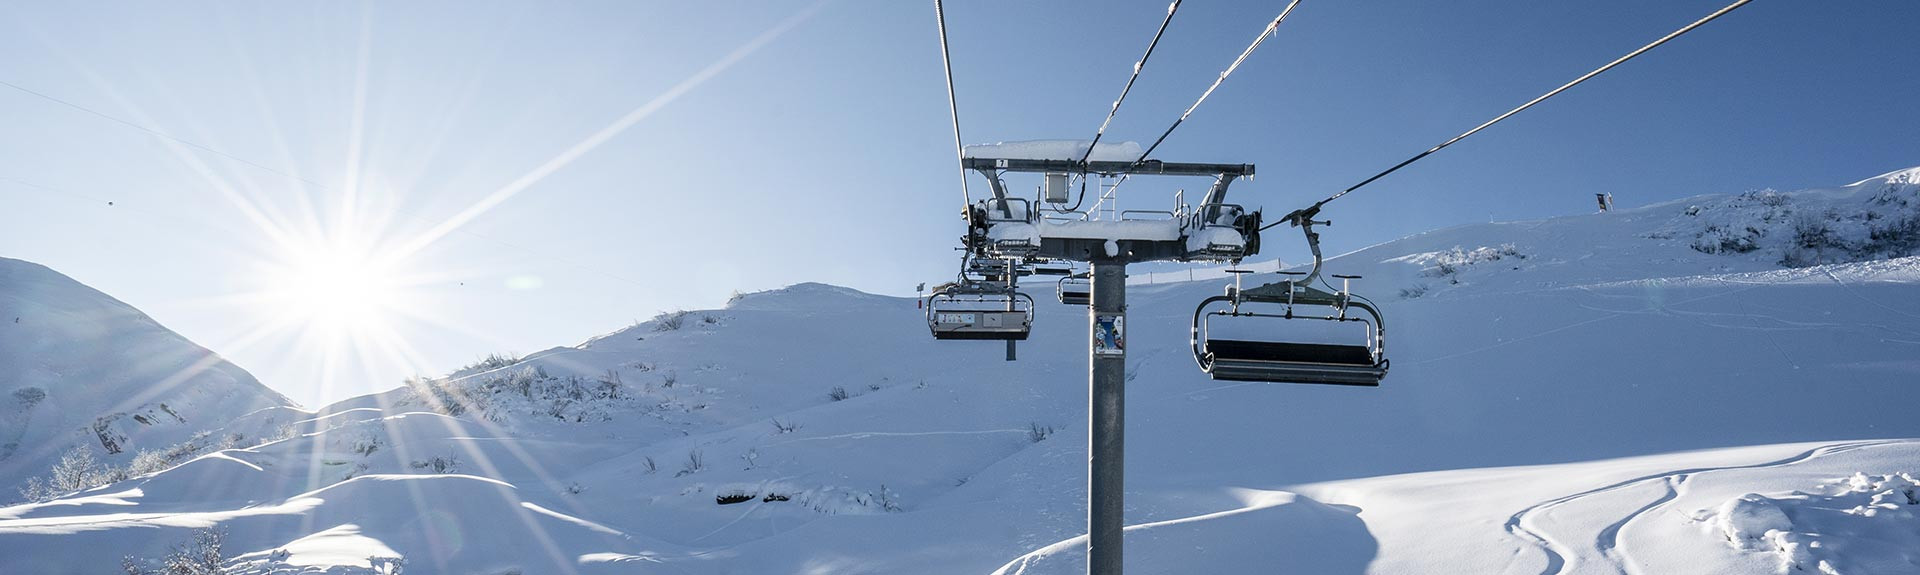 Ski lifts for pedestrians